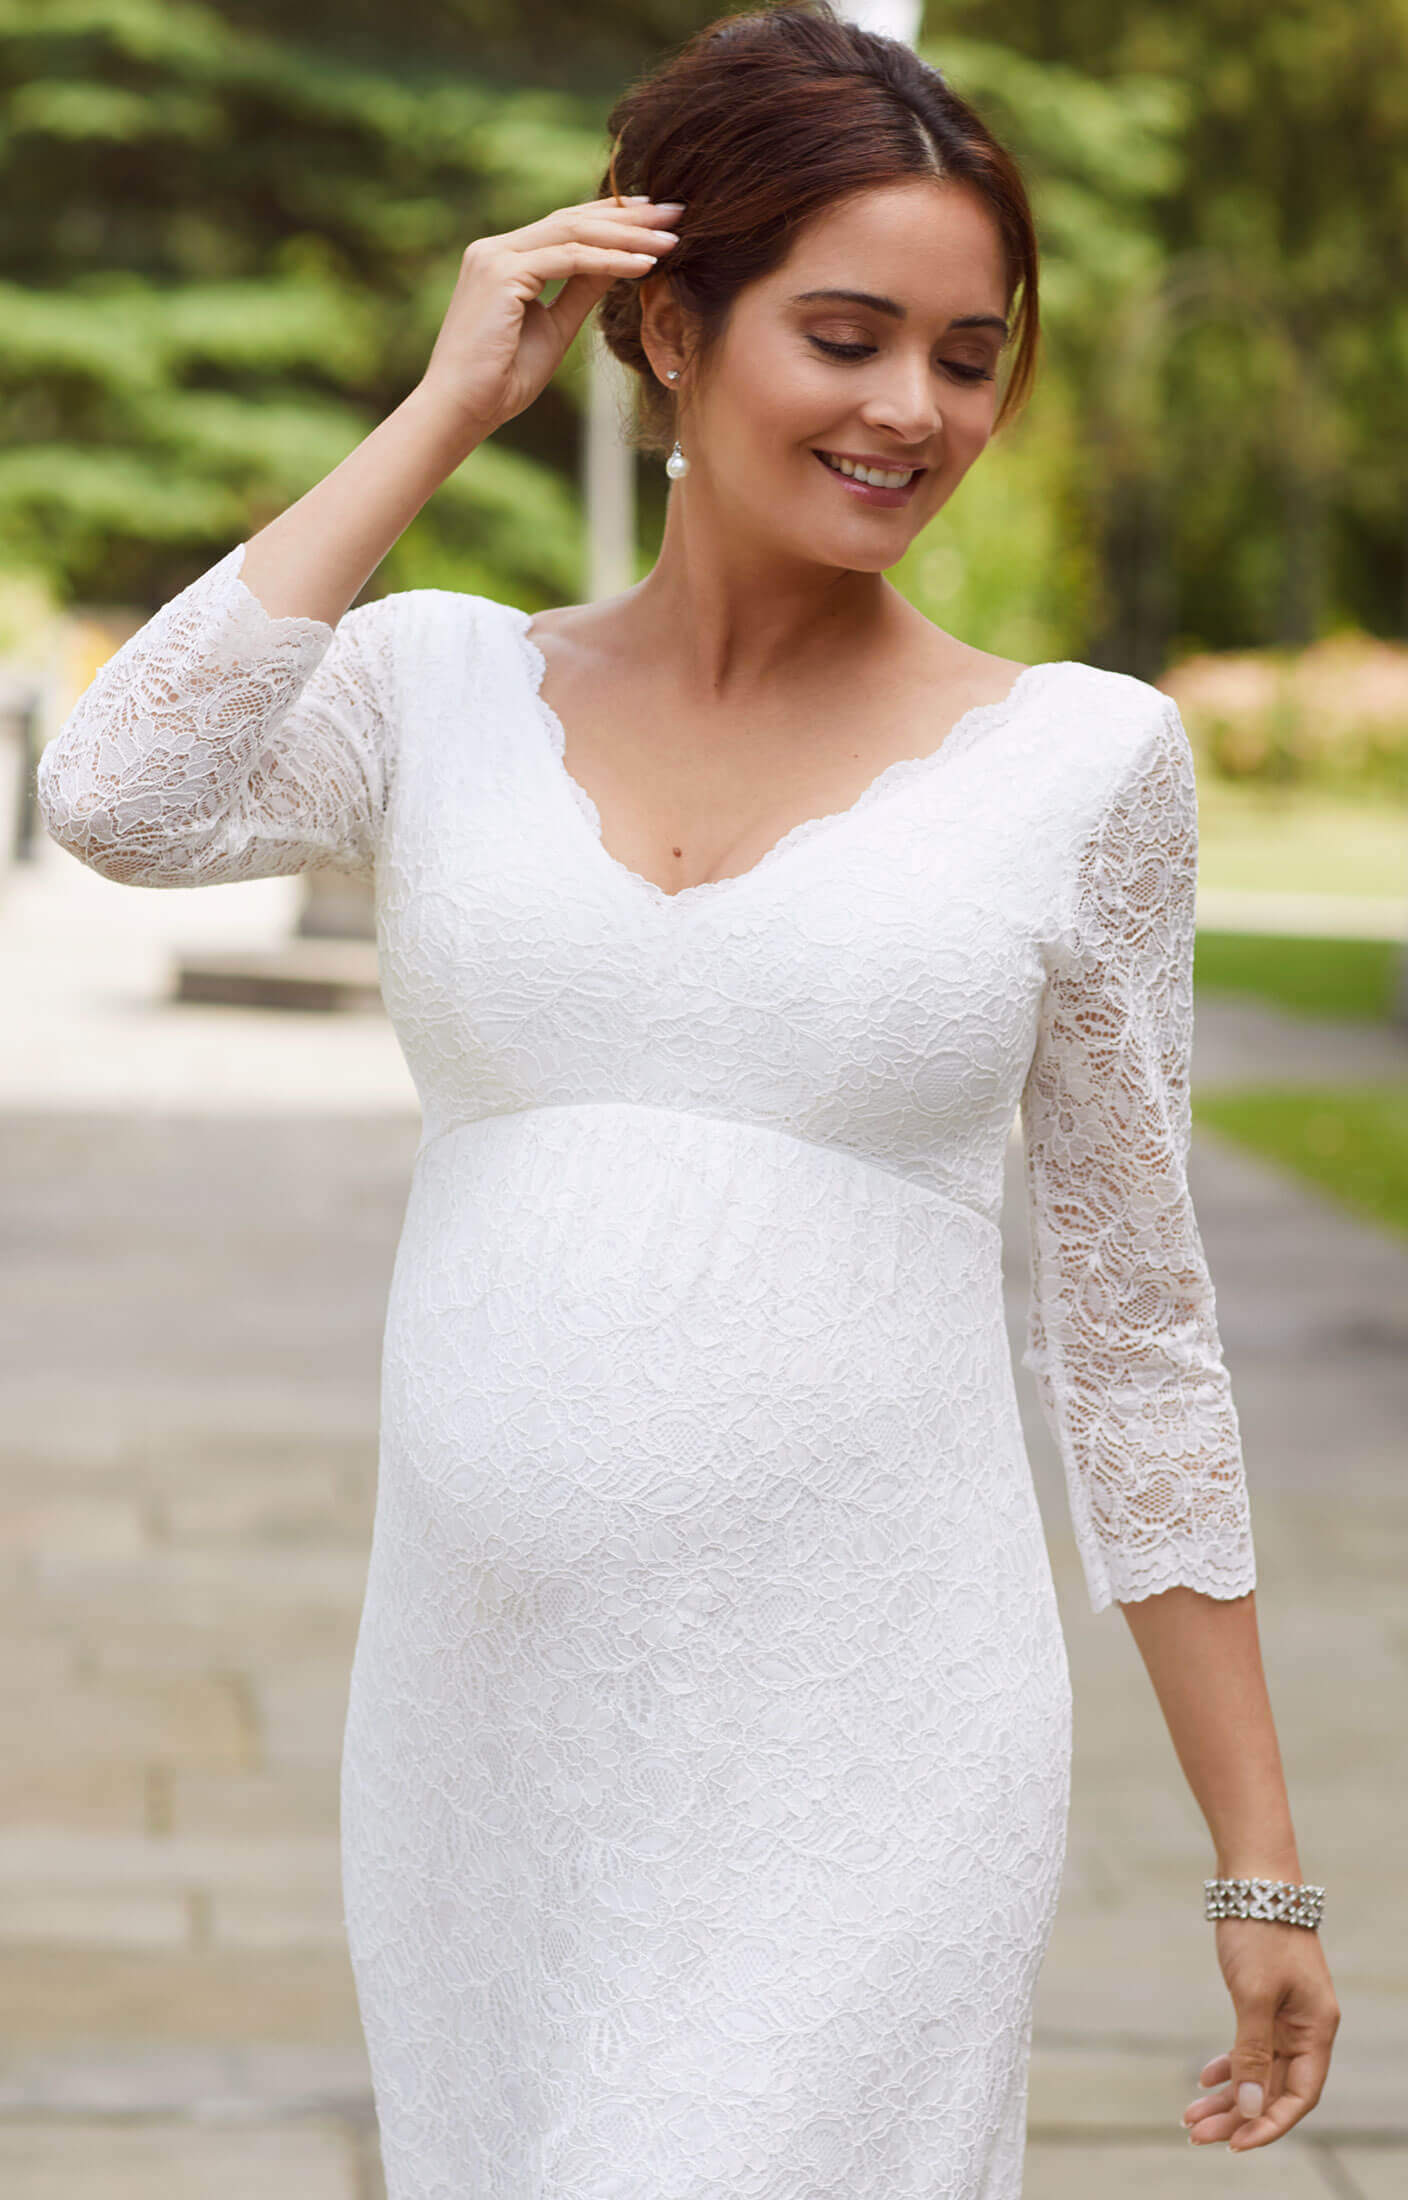 Chloe Lace Maternity Wedding Gown Ivory - Maternity Wedding Dresses ...